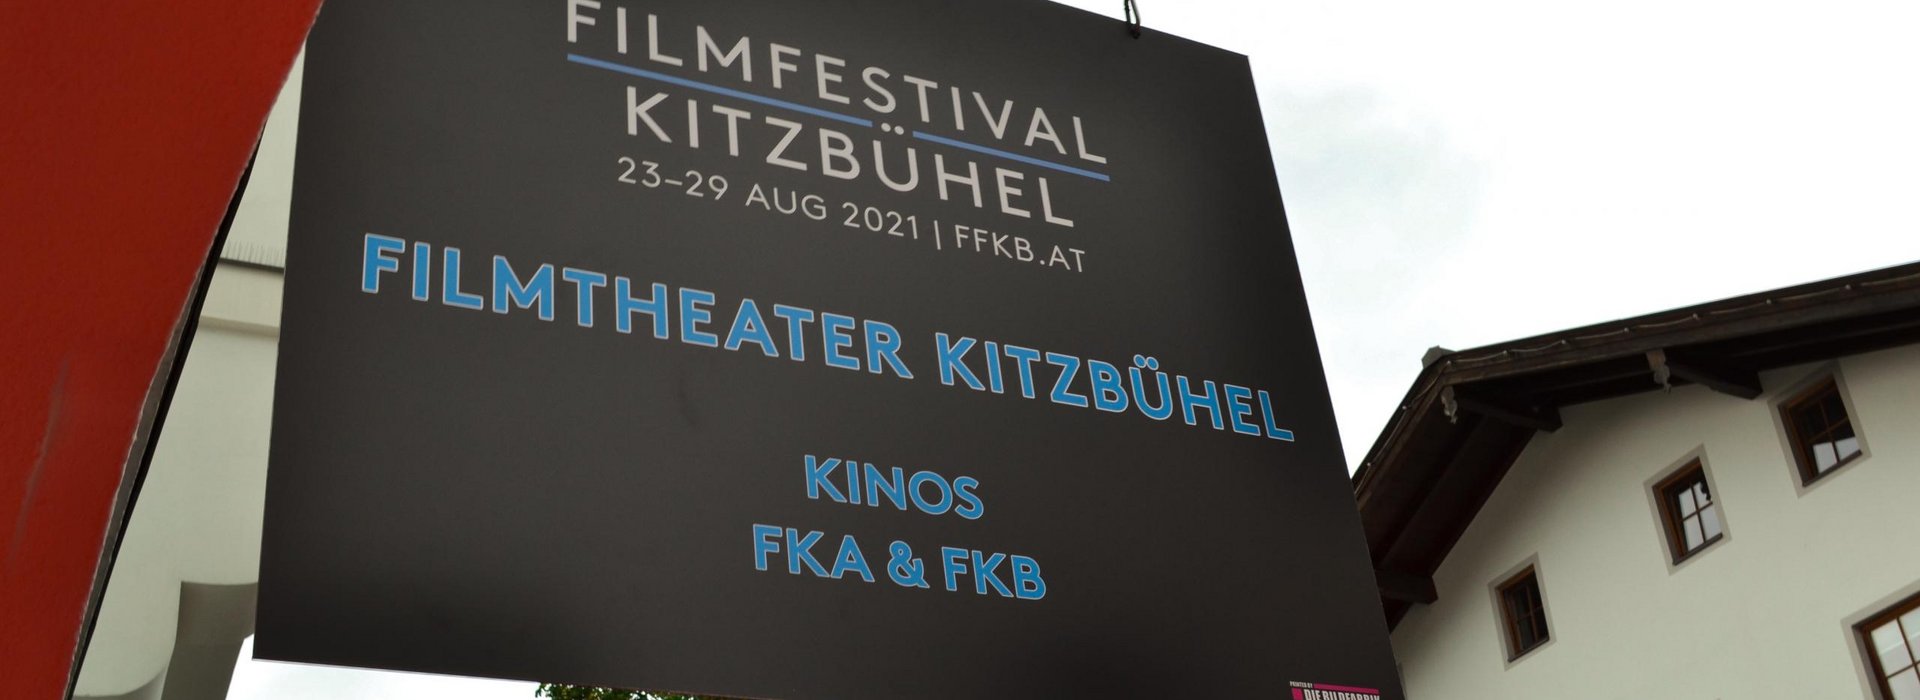 Filmfestival Kitzbühel 